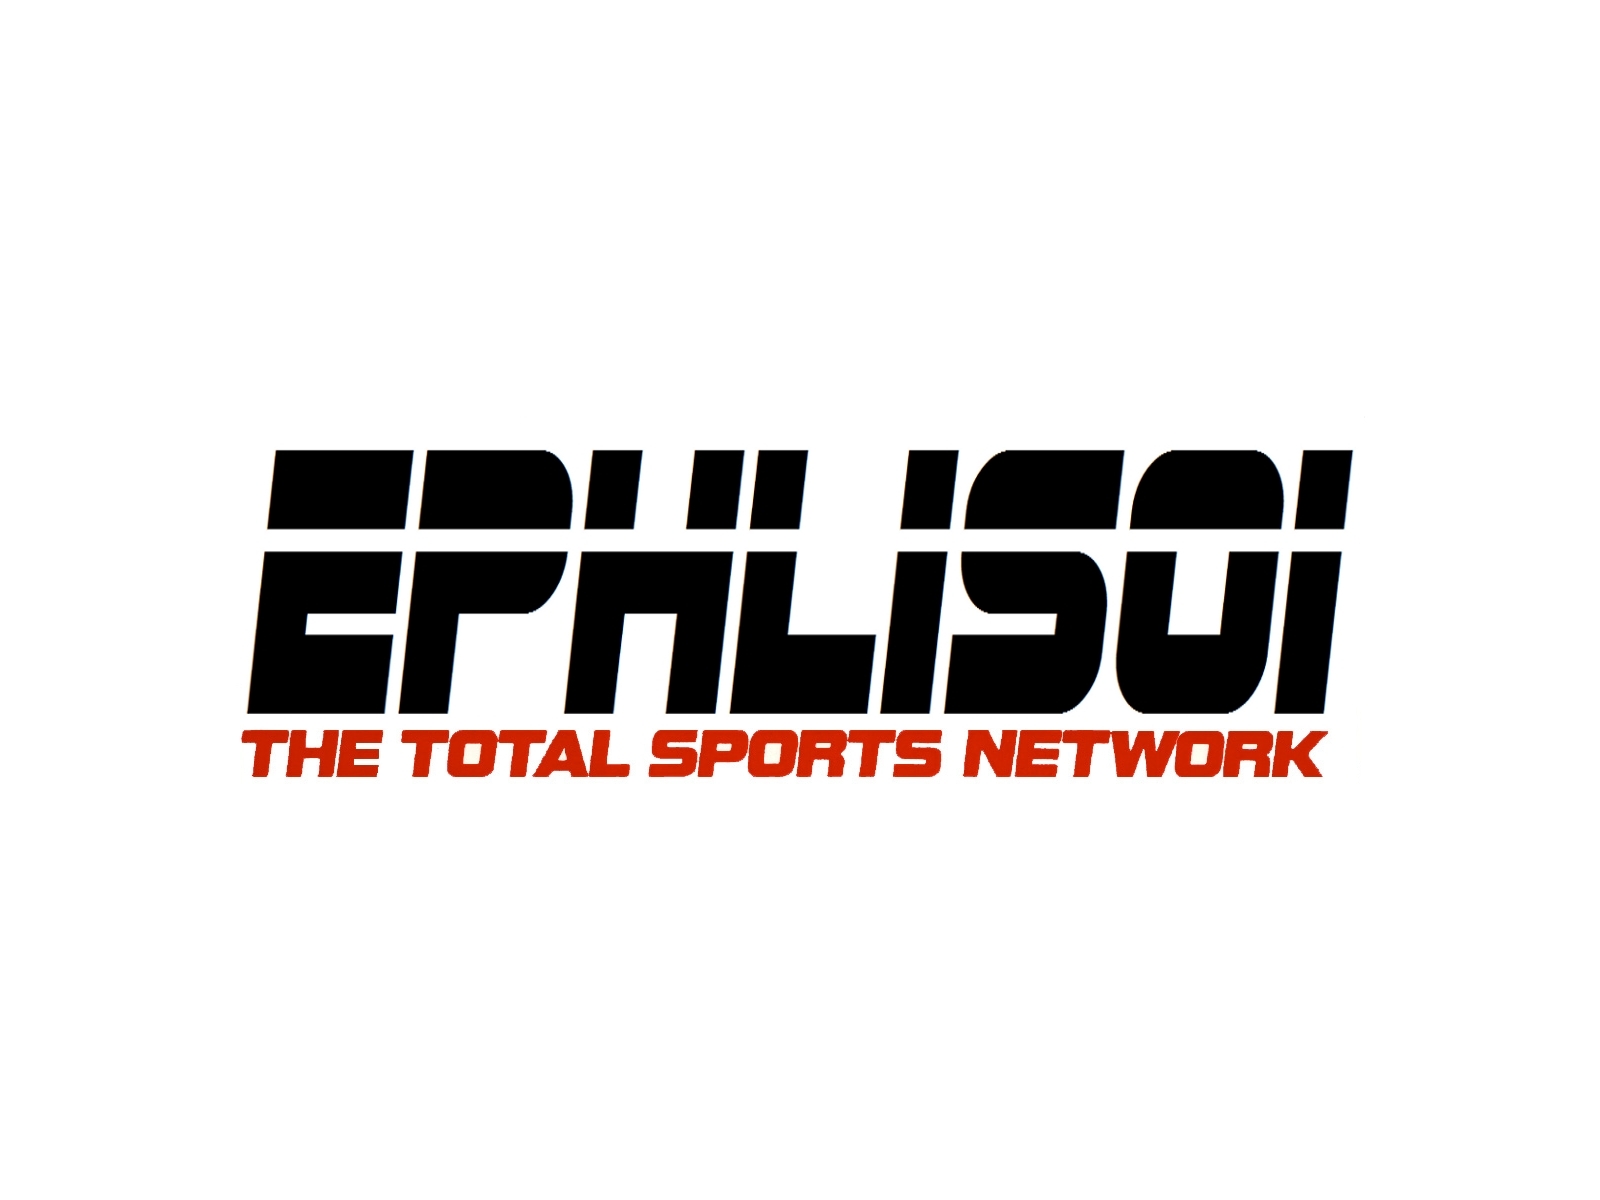 EPHLIS01 THE TOTAL SPORTS NETWORK.JPG